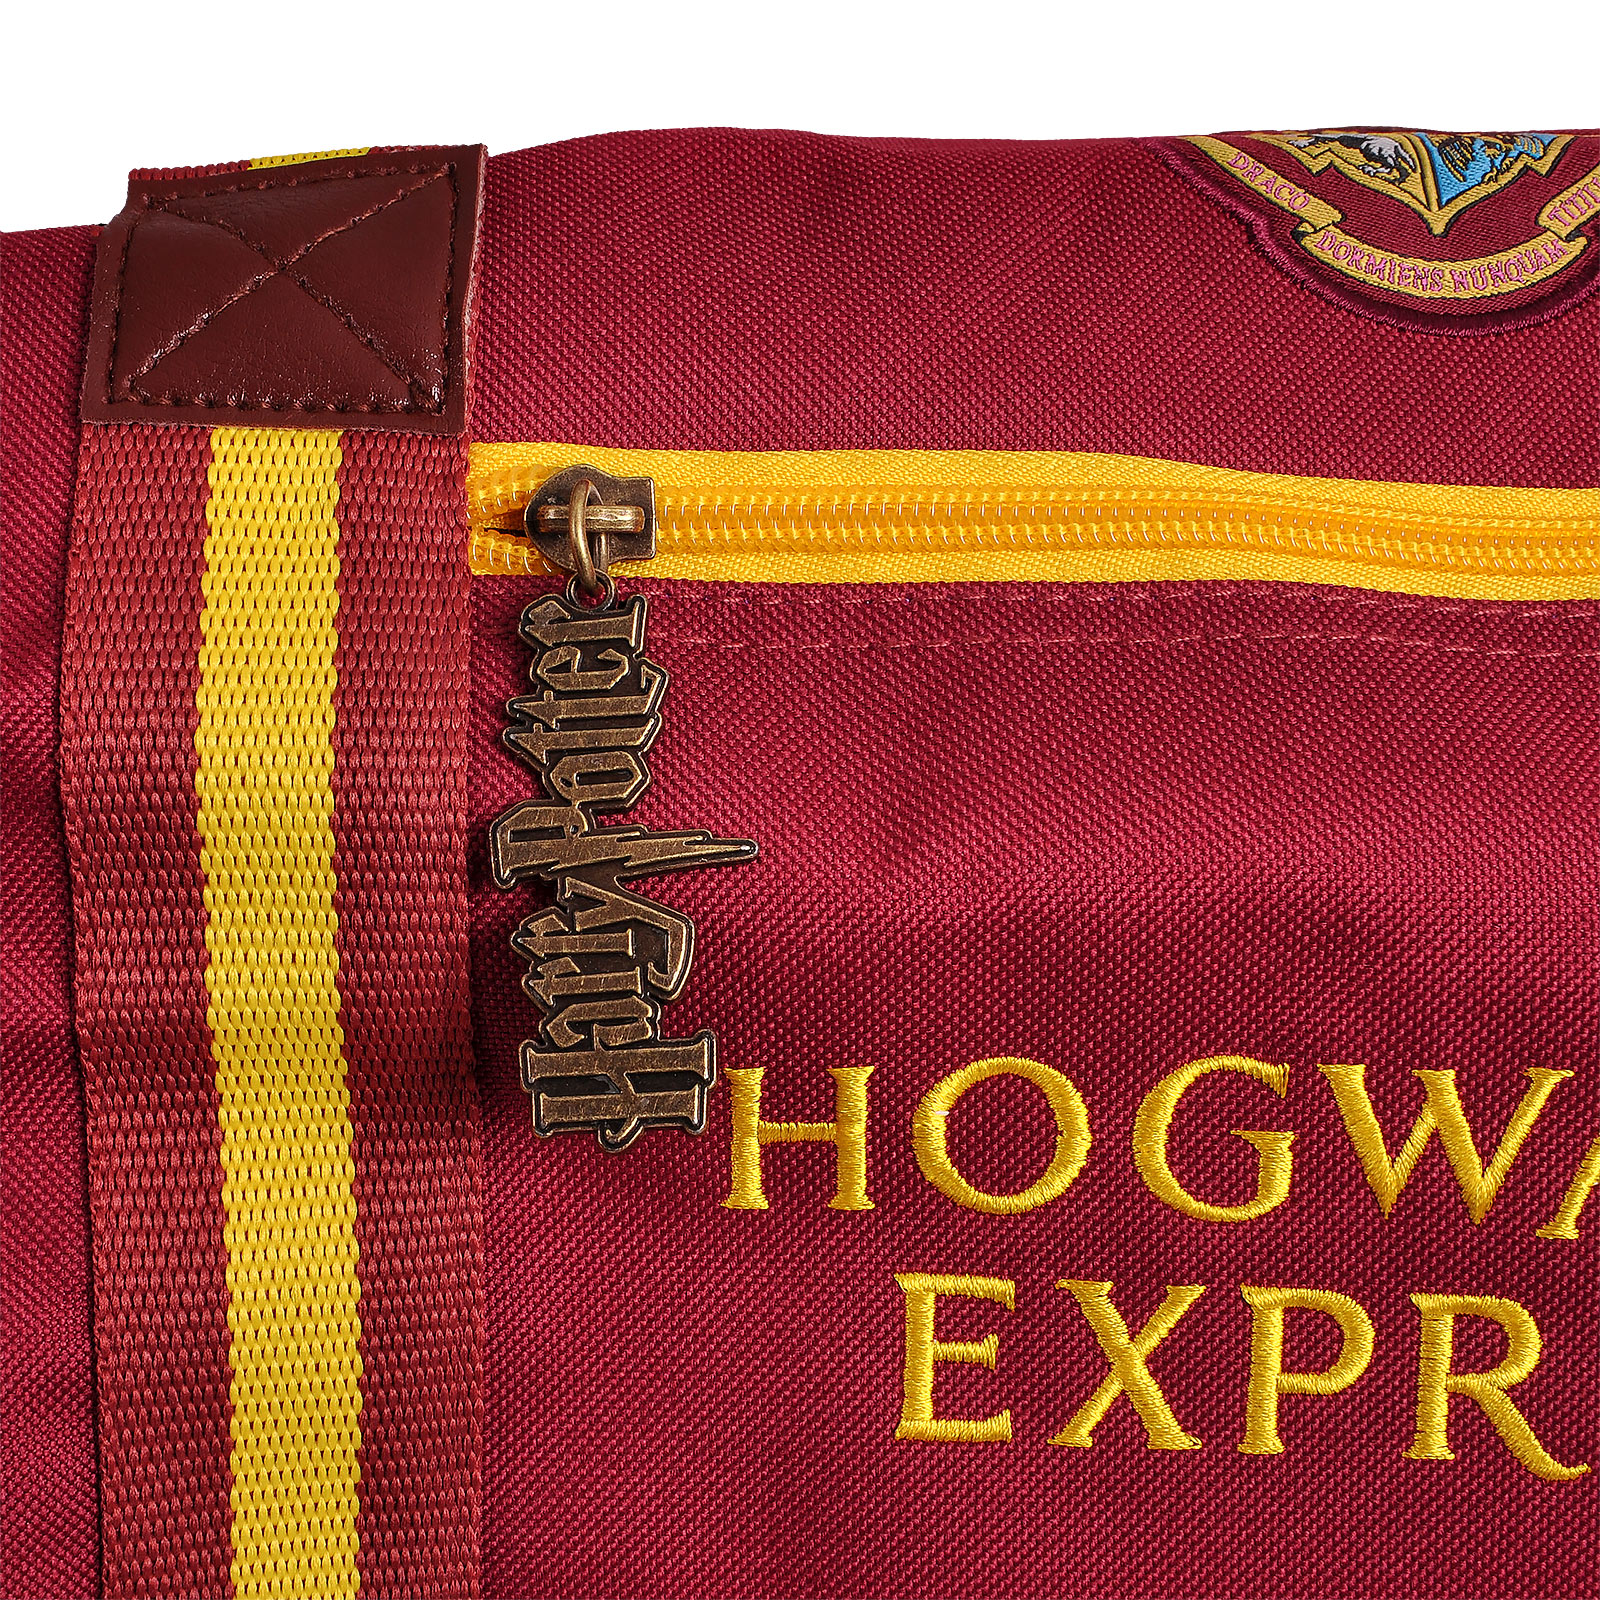 Harry Potter - Hogwarts Express 9 3/4 Reistas